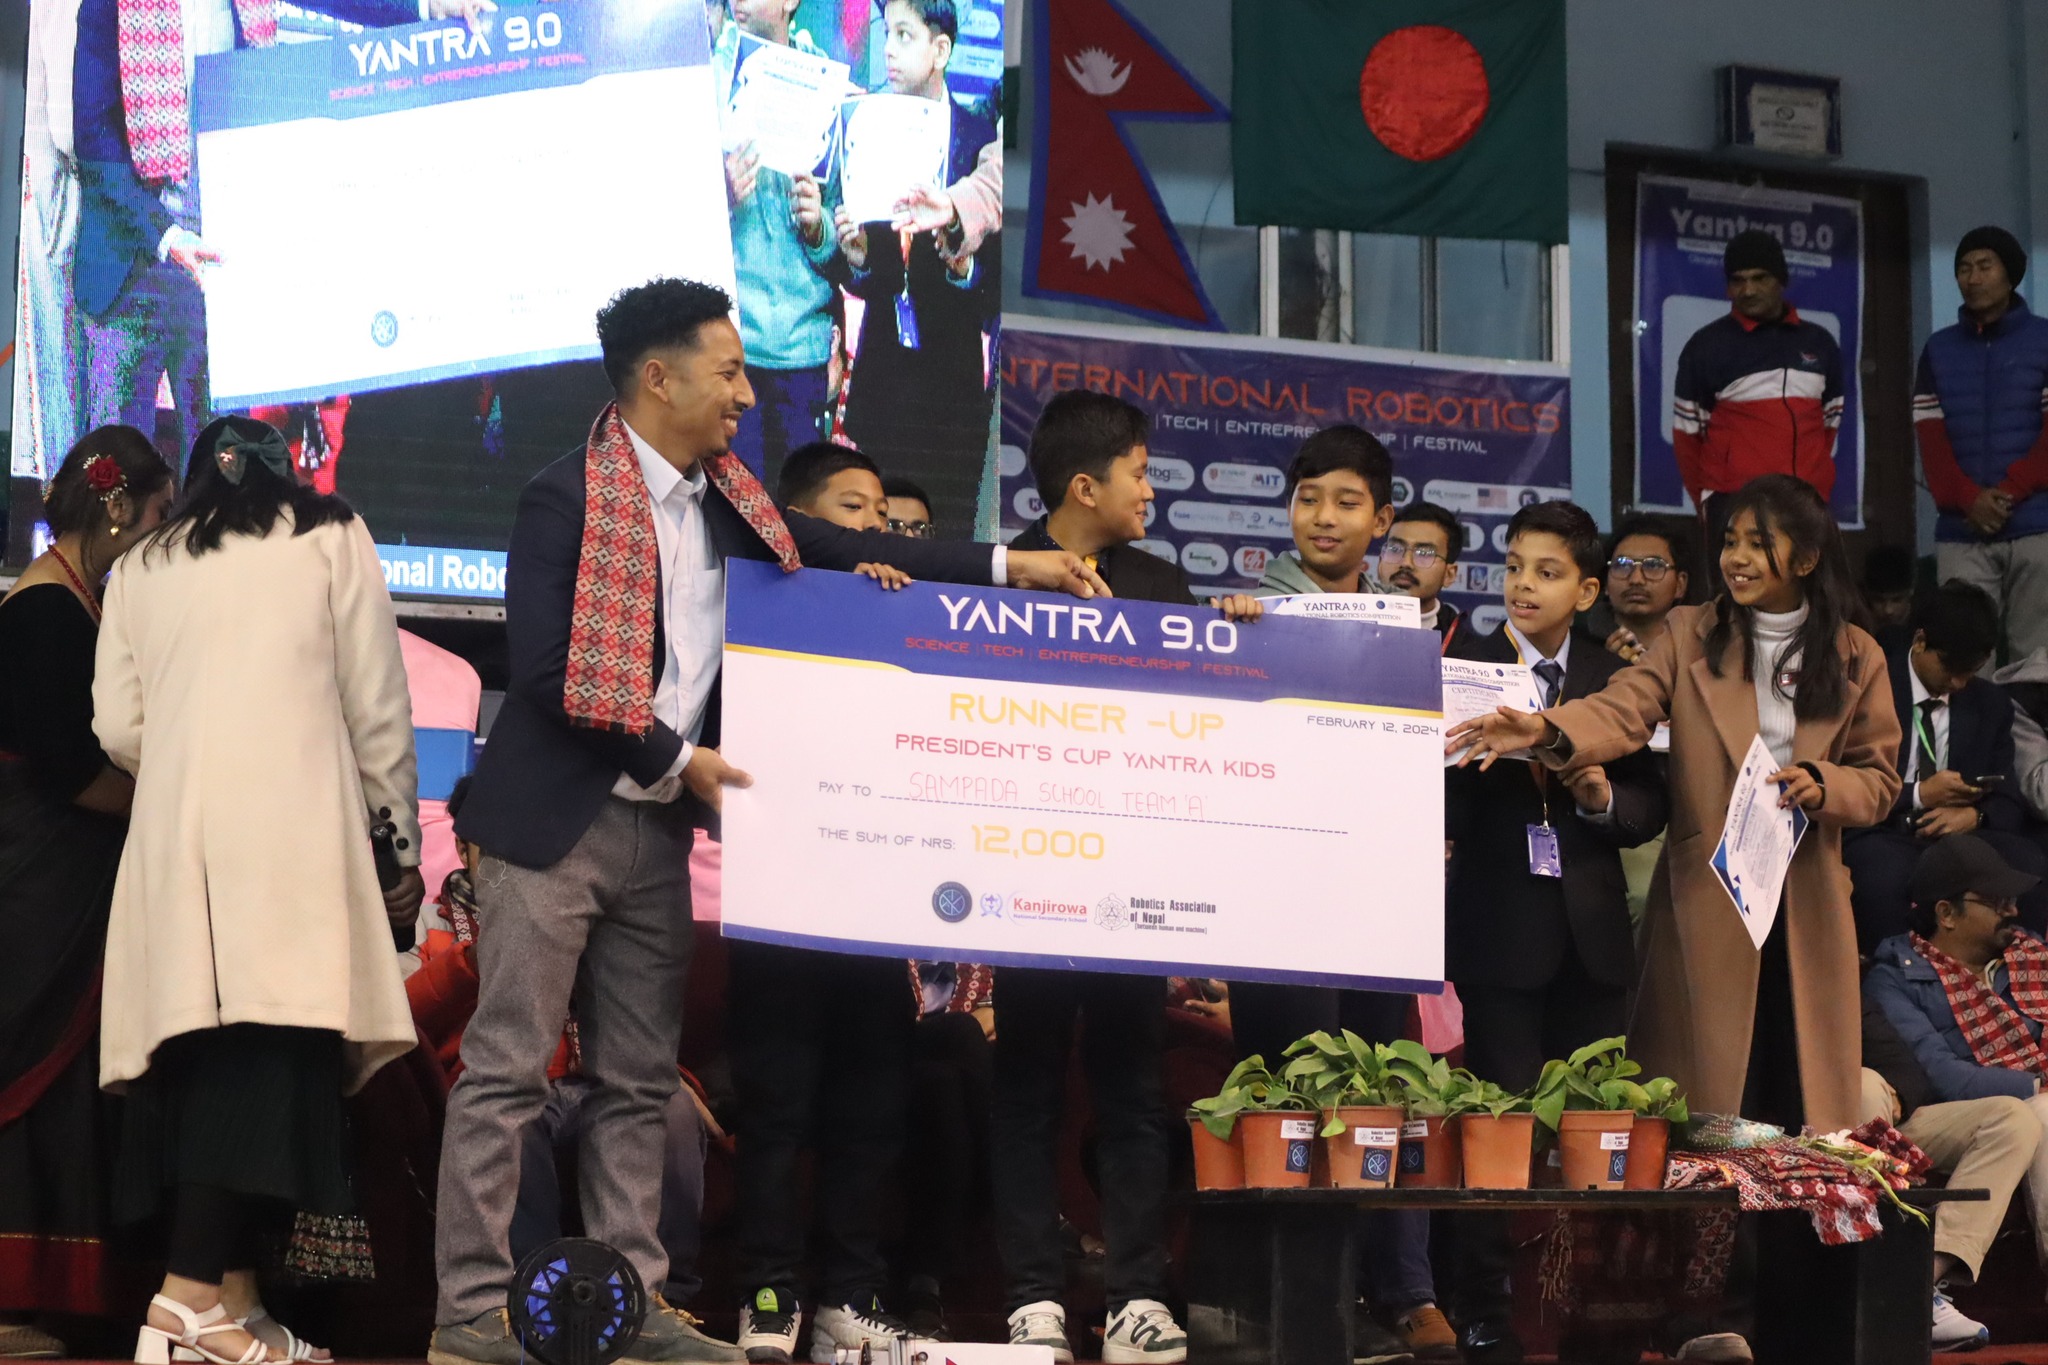 Presidents Cup Yantra Kids Runner-up - Sapada School Team A